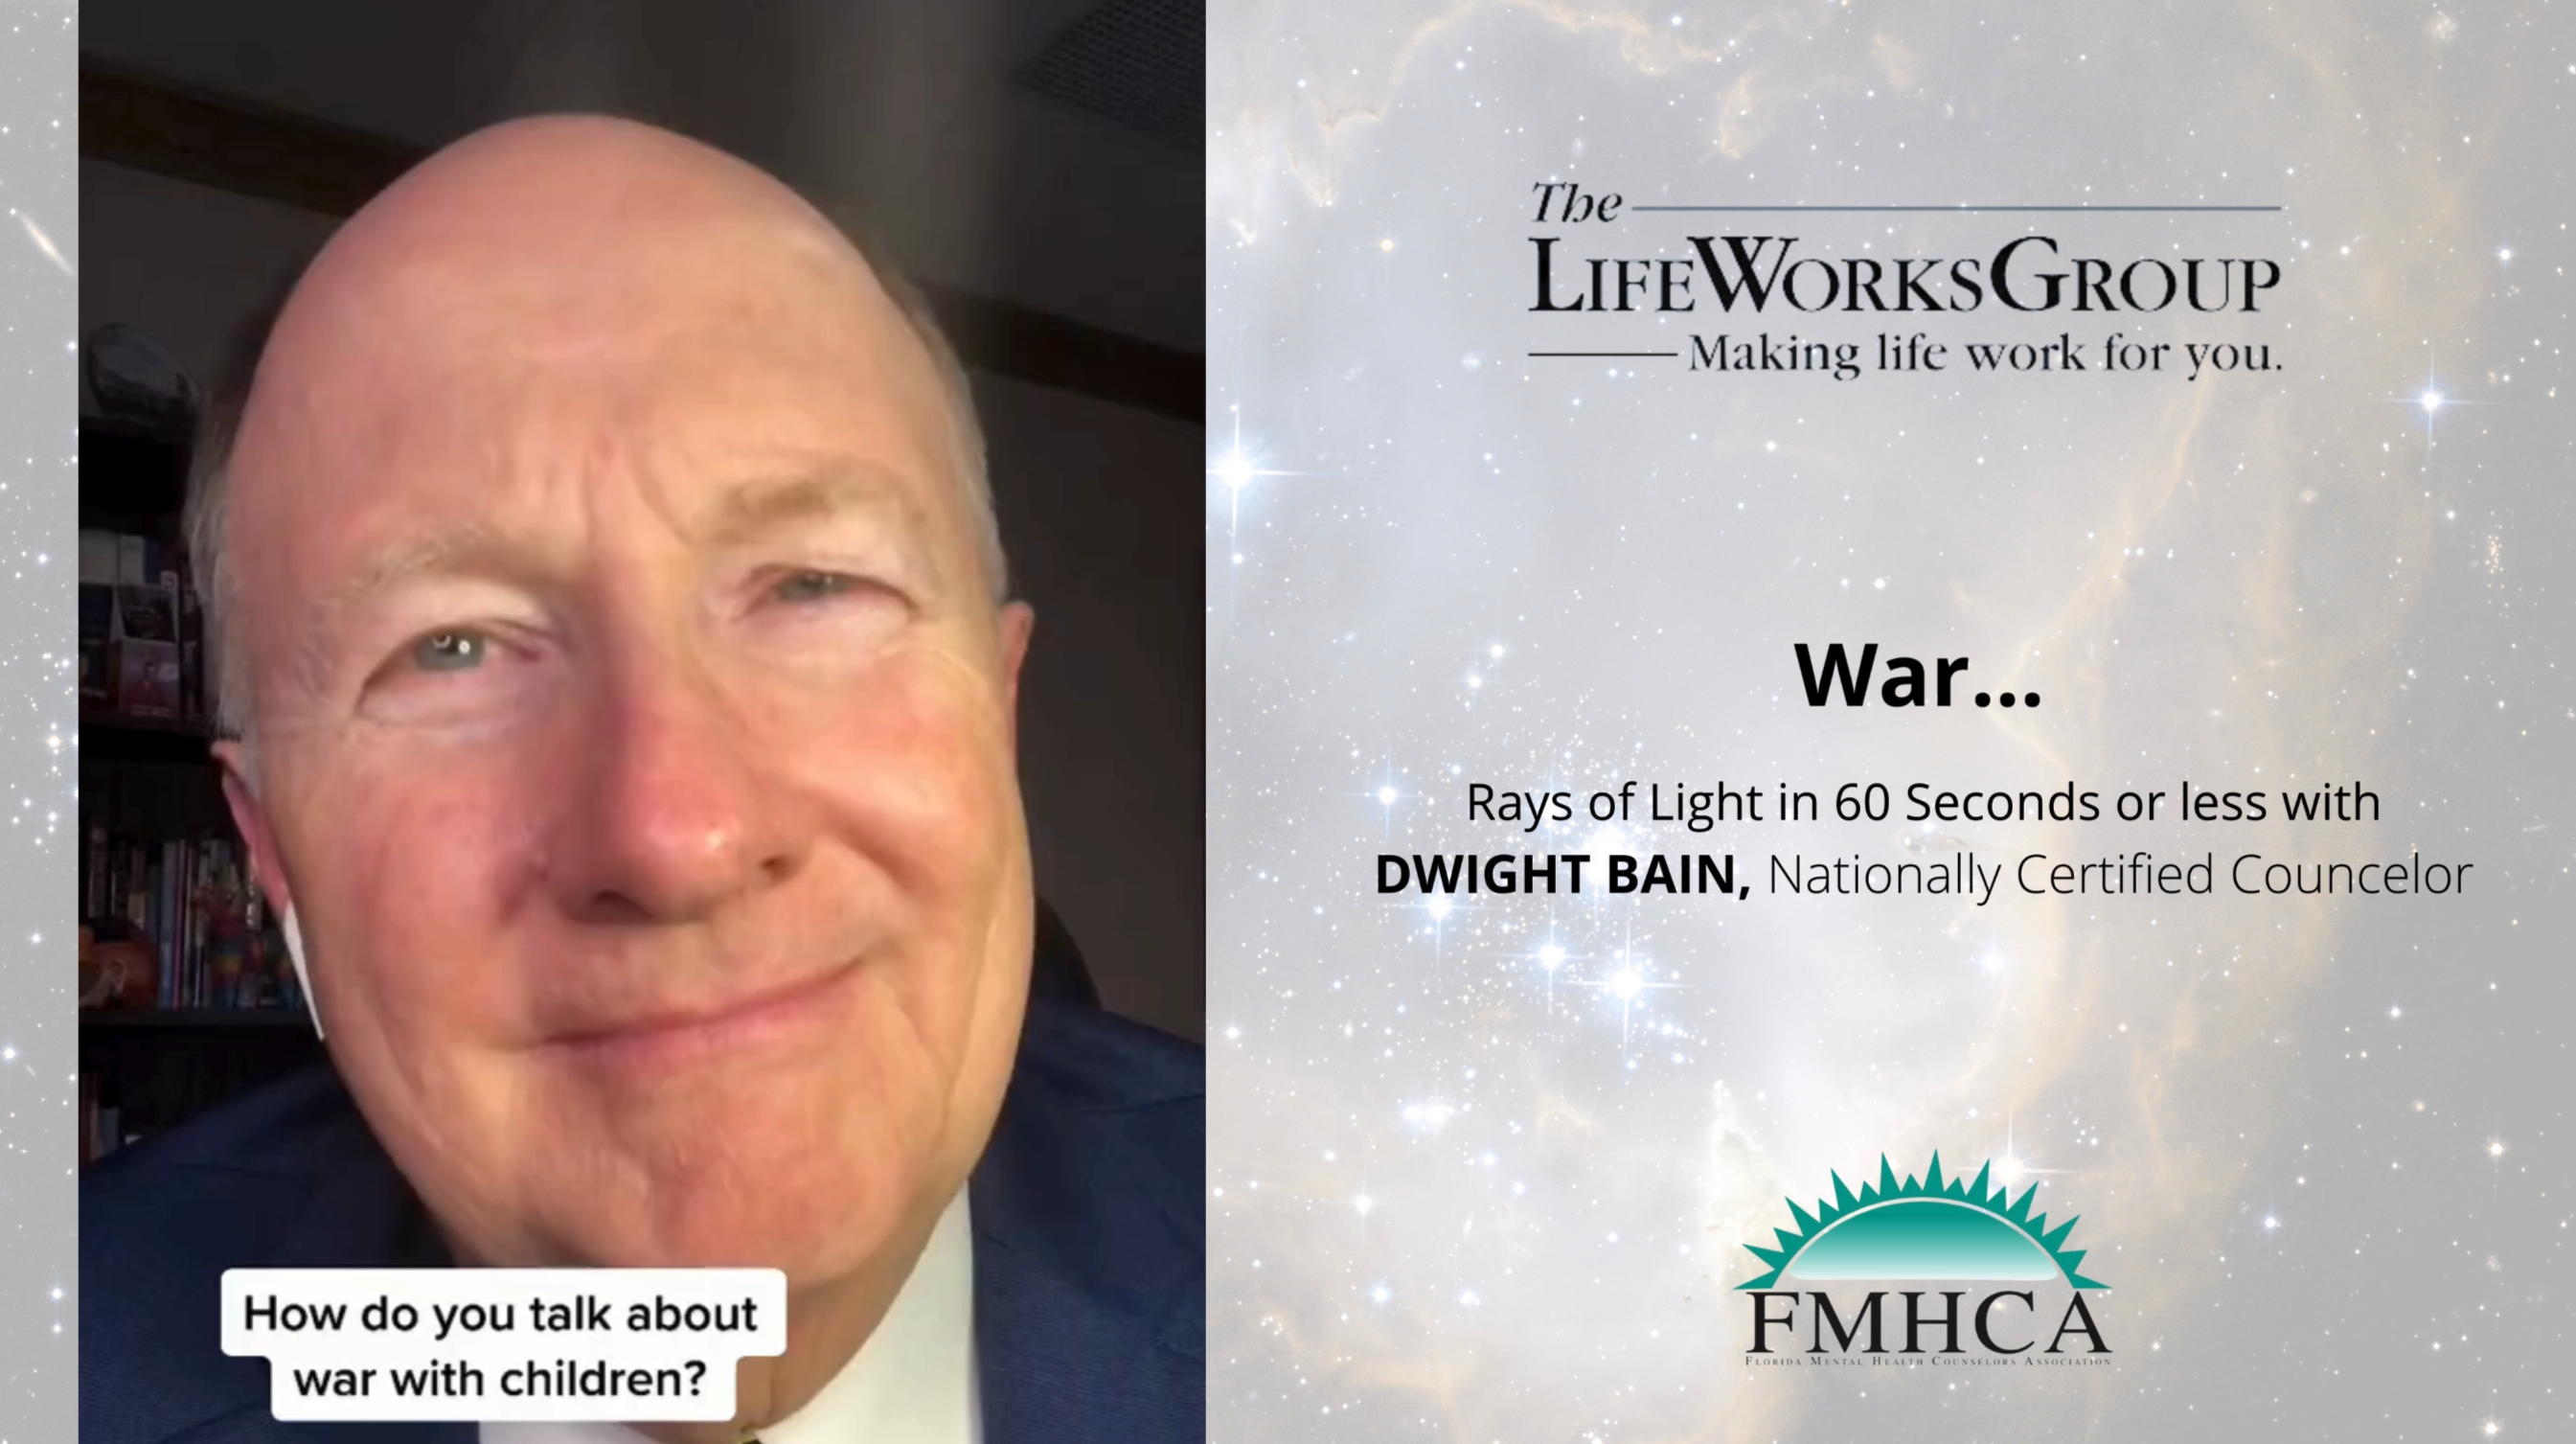 Ray of Light: War